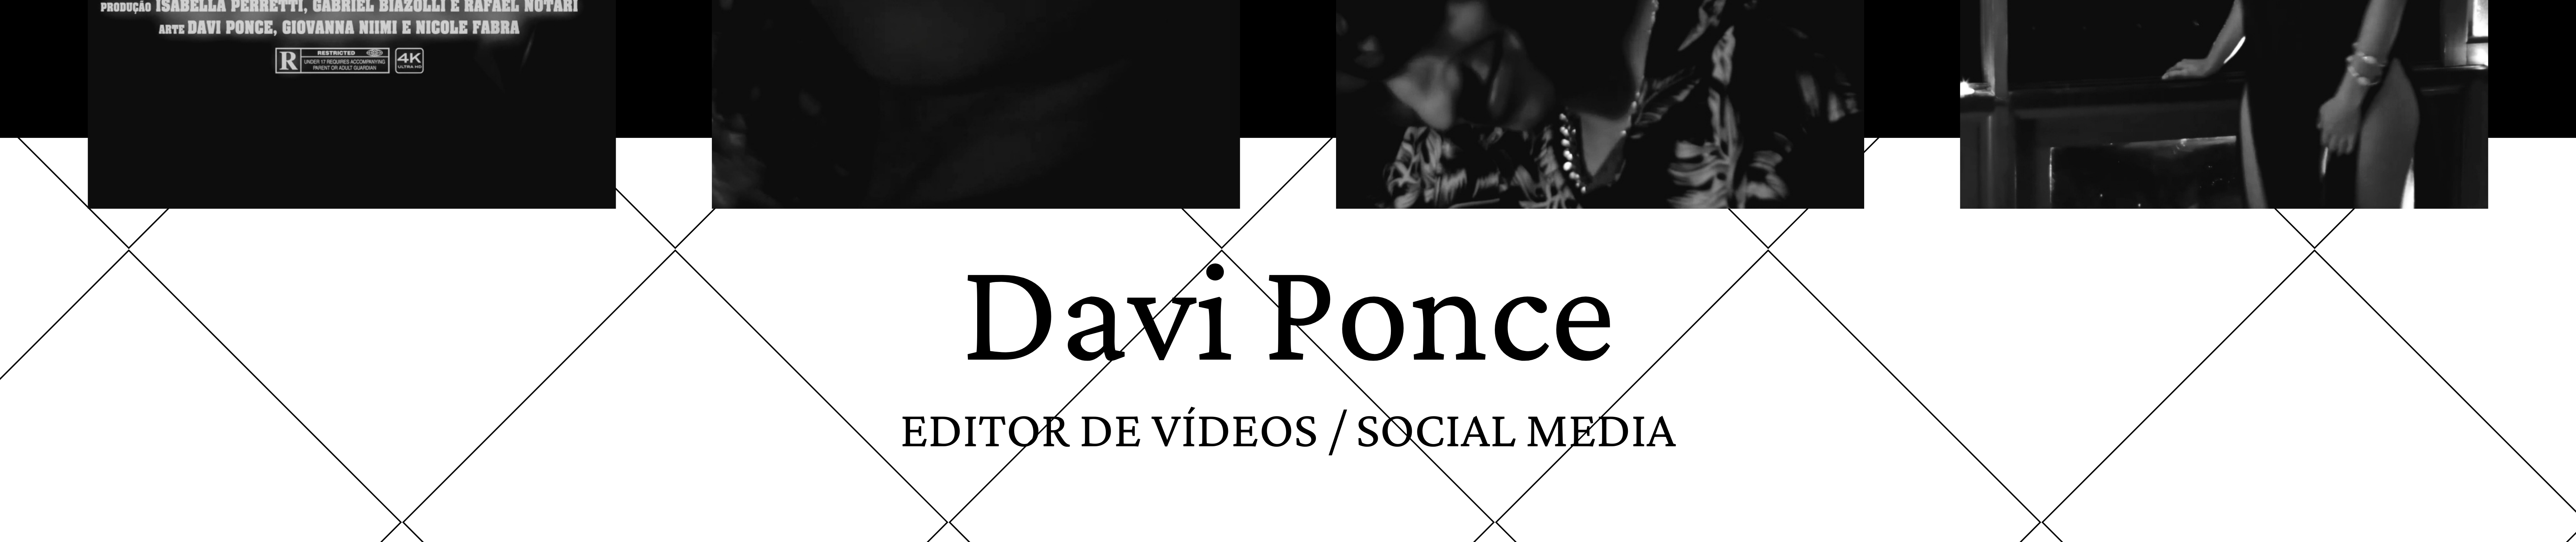 Davi Ponce's profile banner